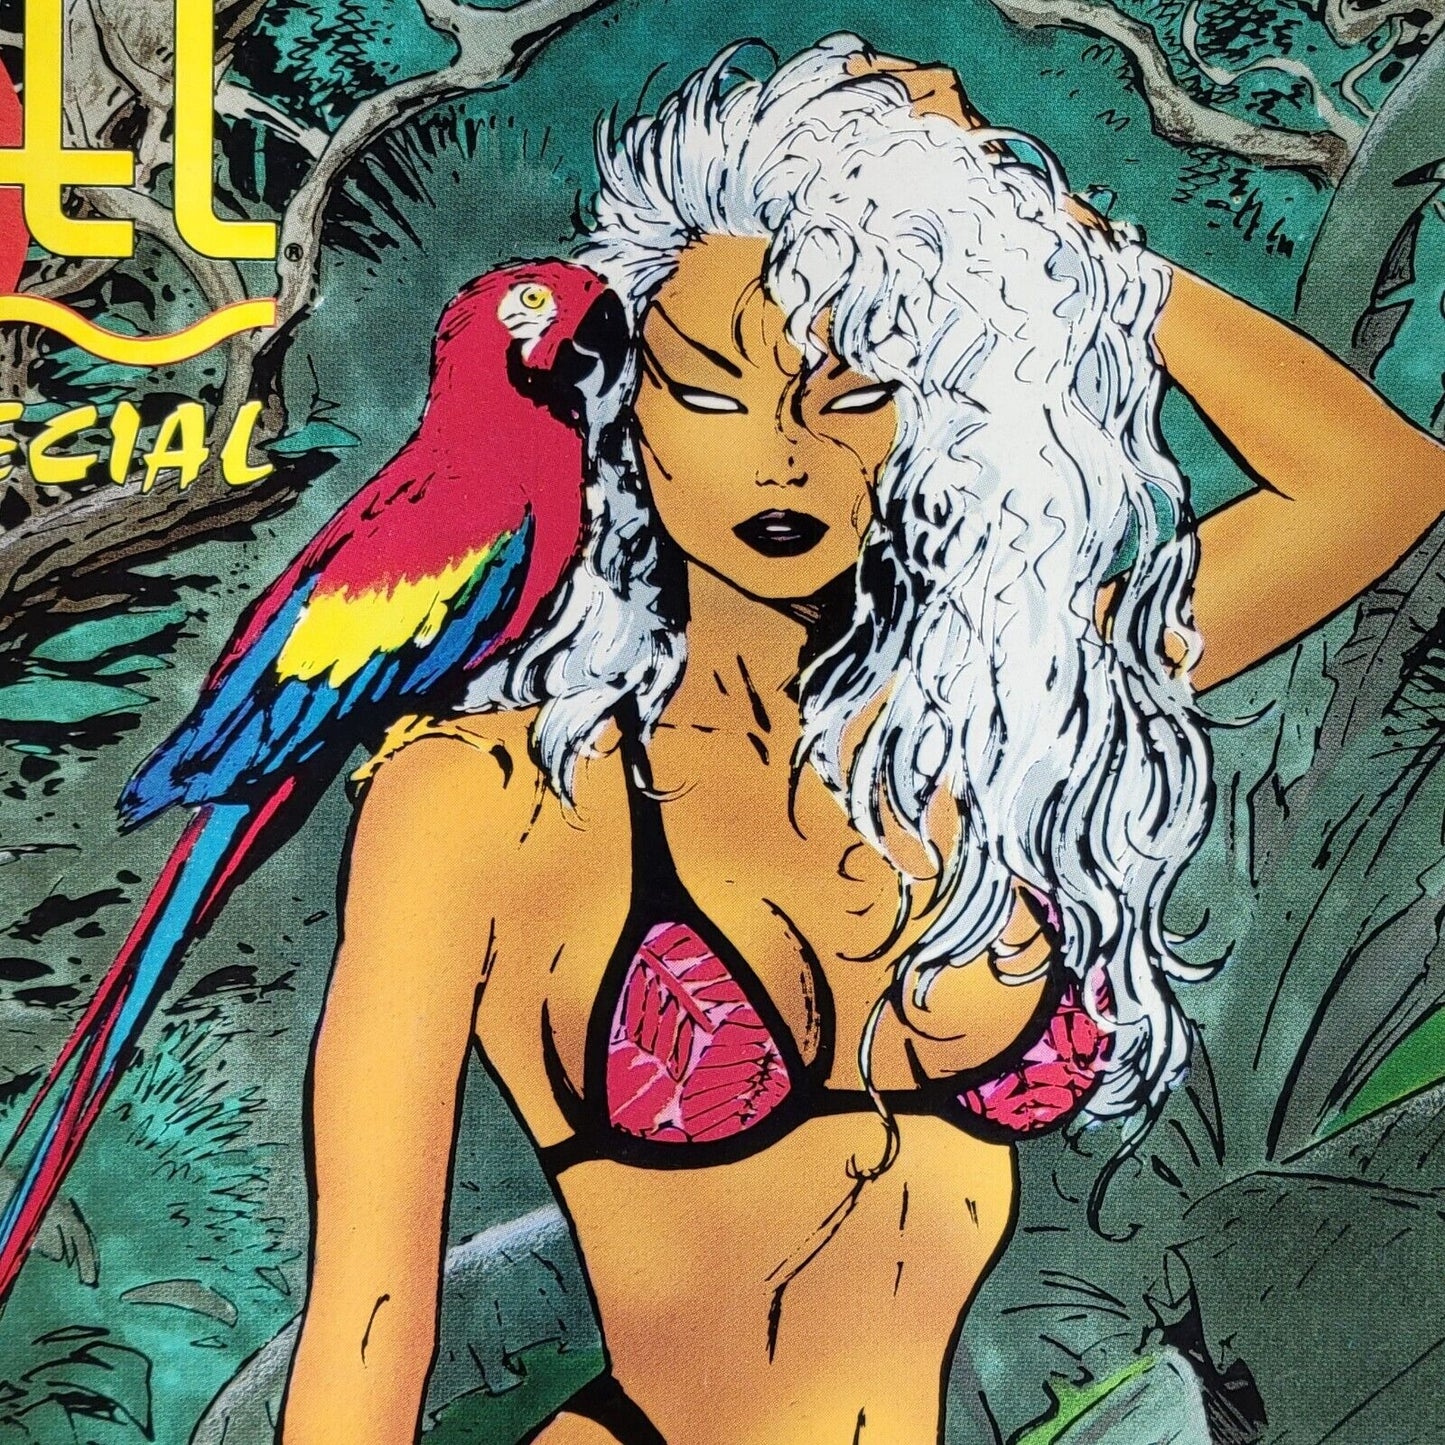 Marvel Swimsuit Special Vintage Comic Magazine 1992 Volume 1 Issue 1 VF